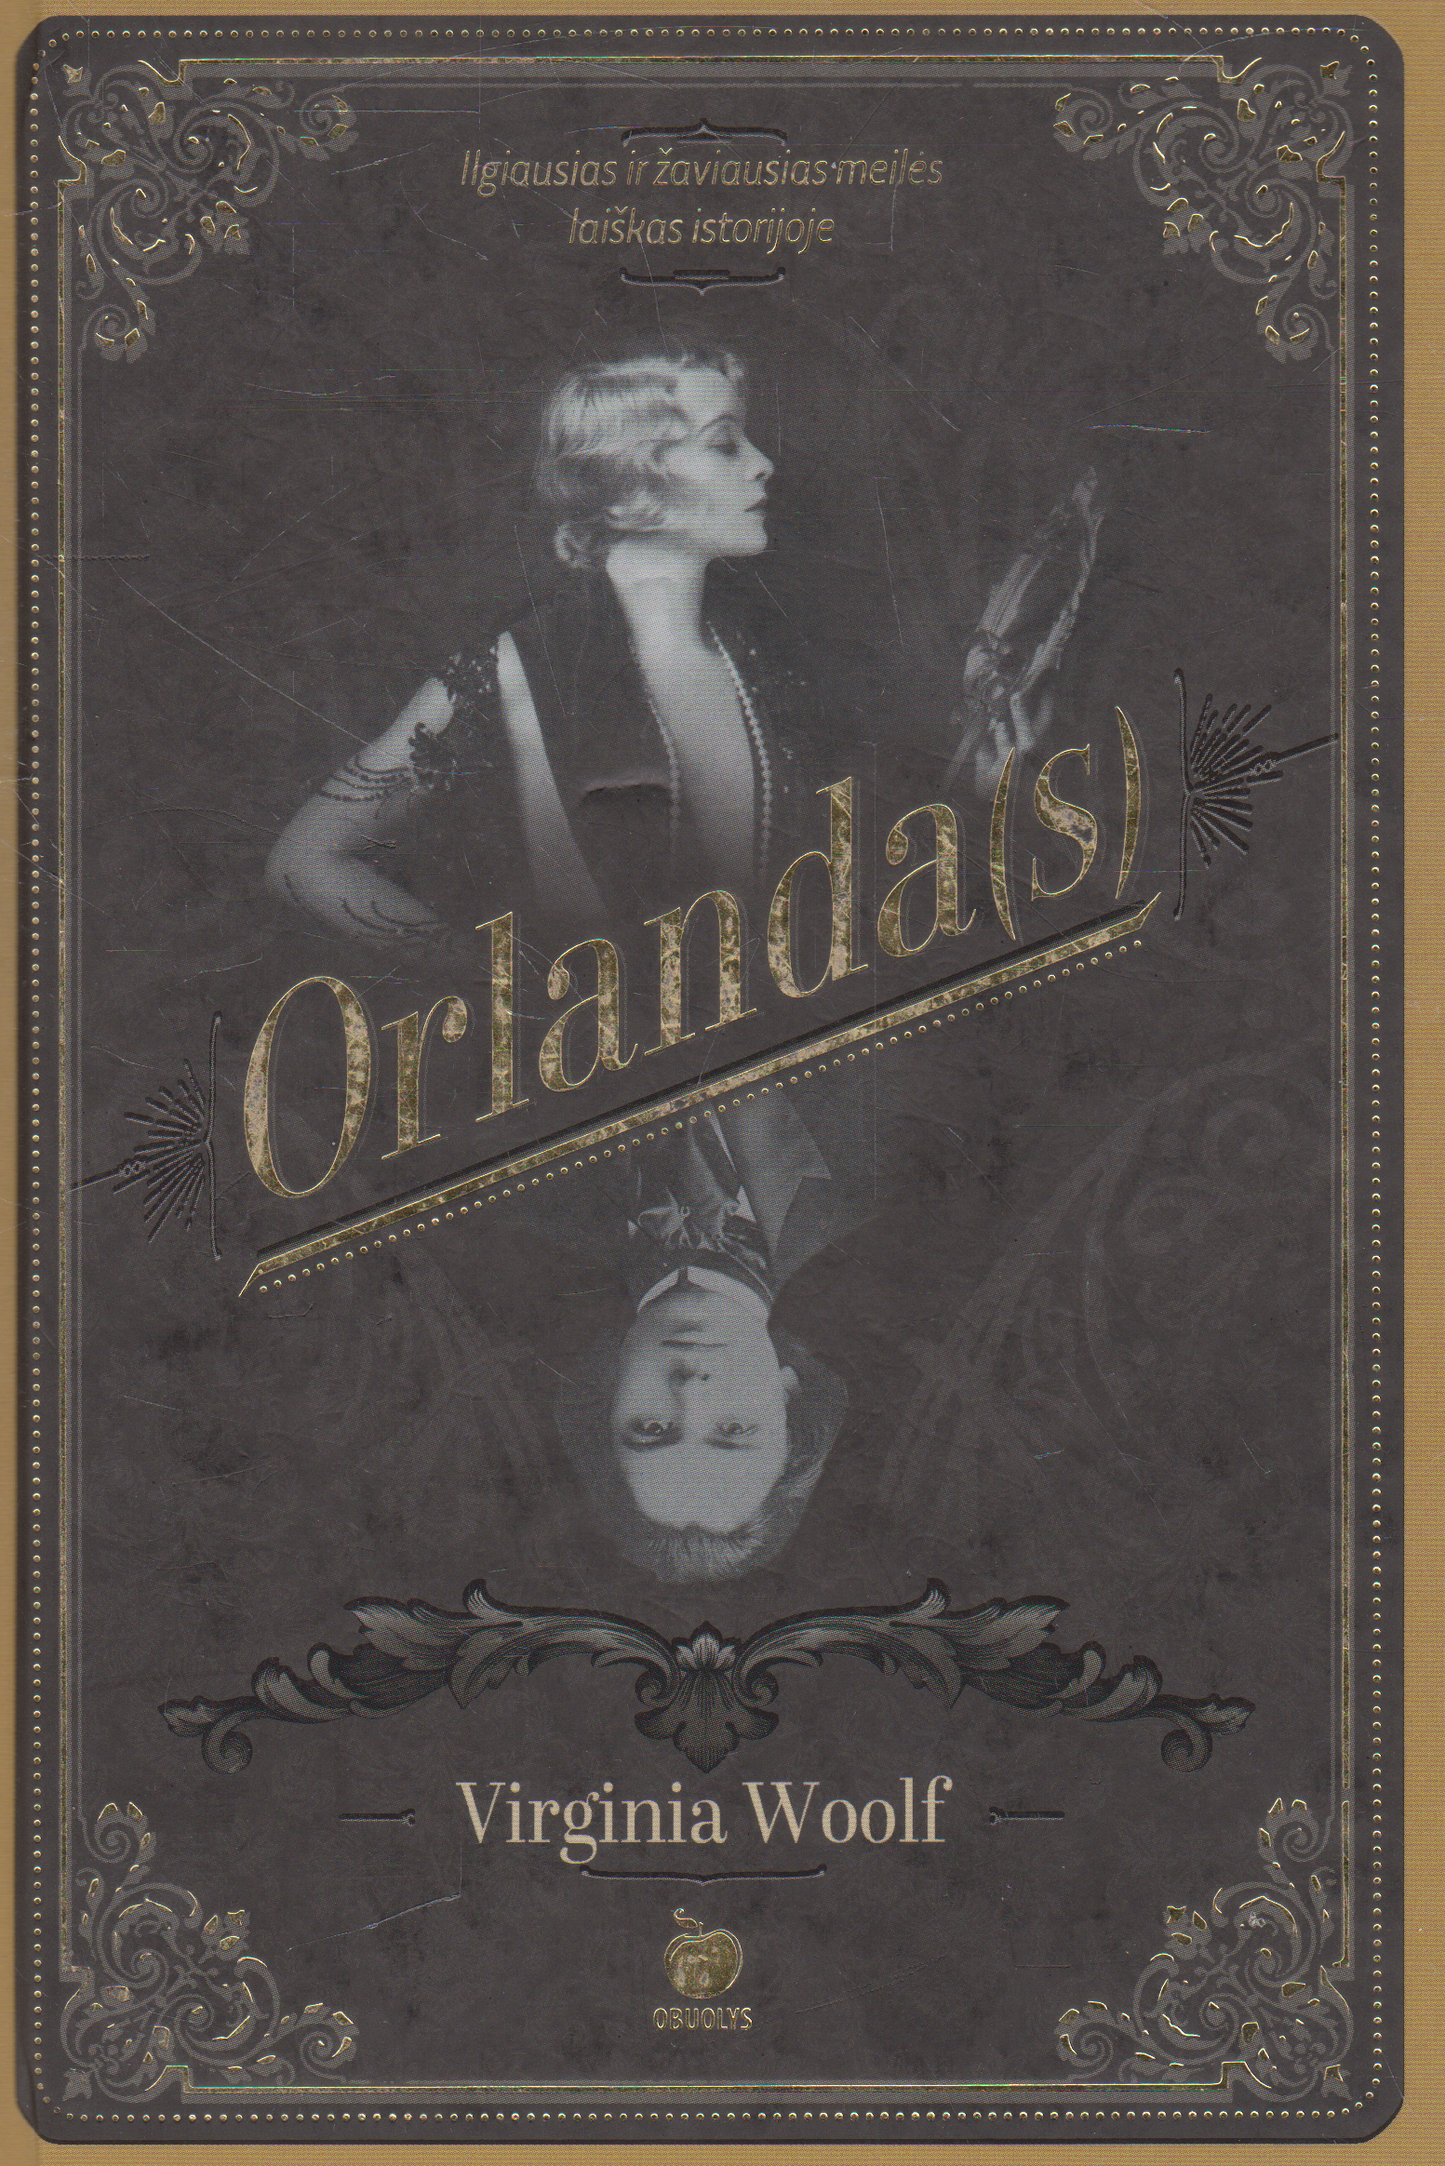 Virginia Woolf - Orlanda(s)